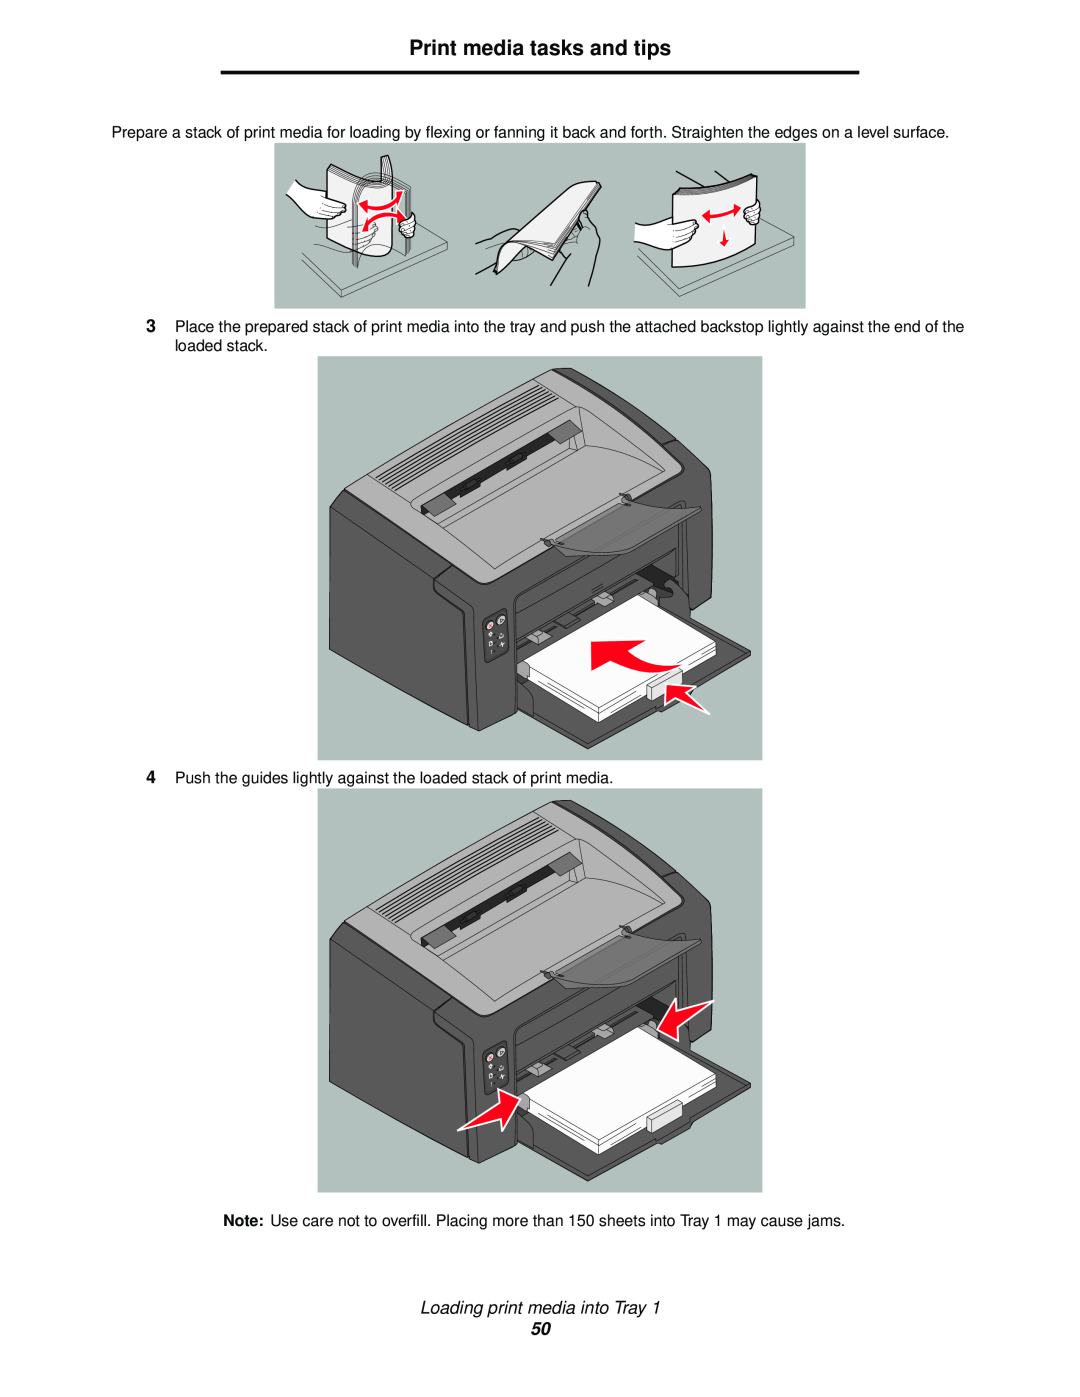 Lexmark 120 manual Print media tasks and tips, Loading print media into Tray 